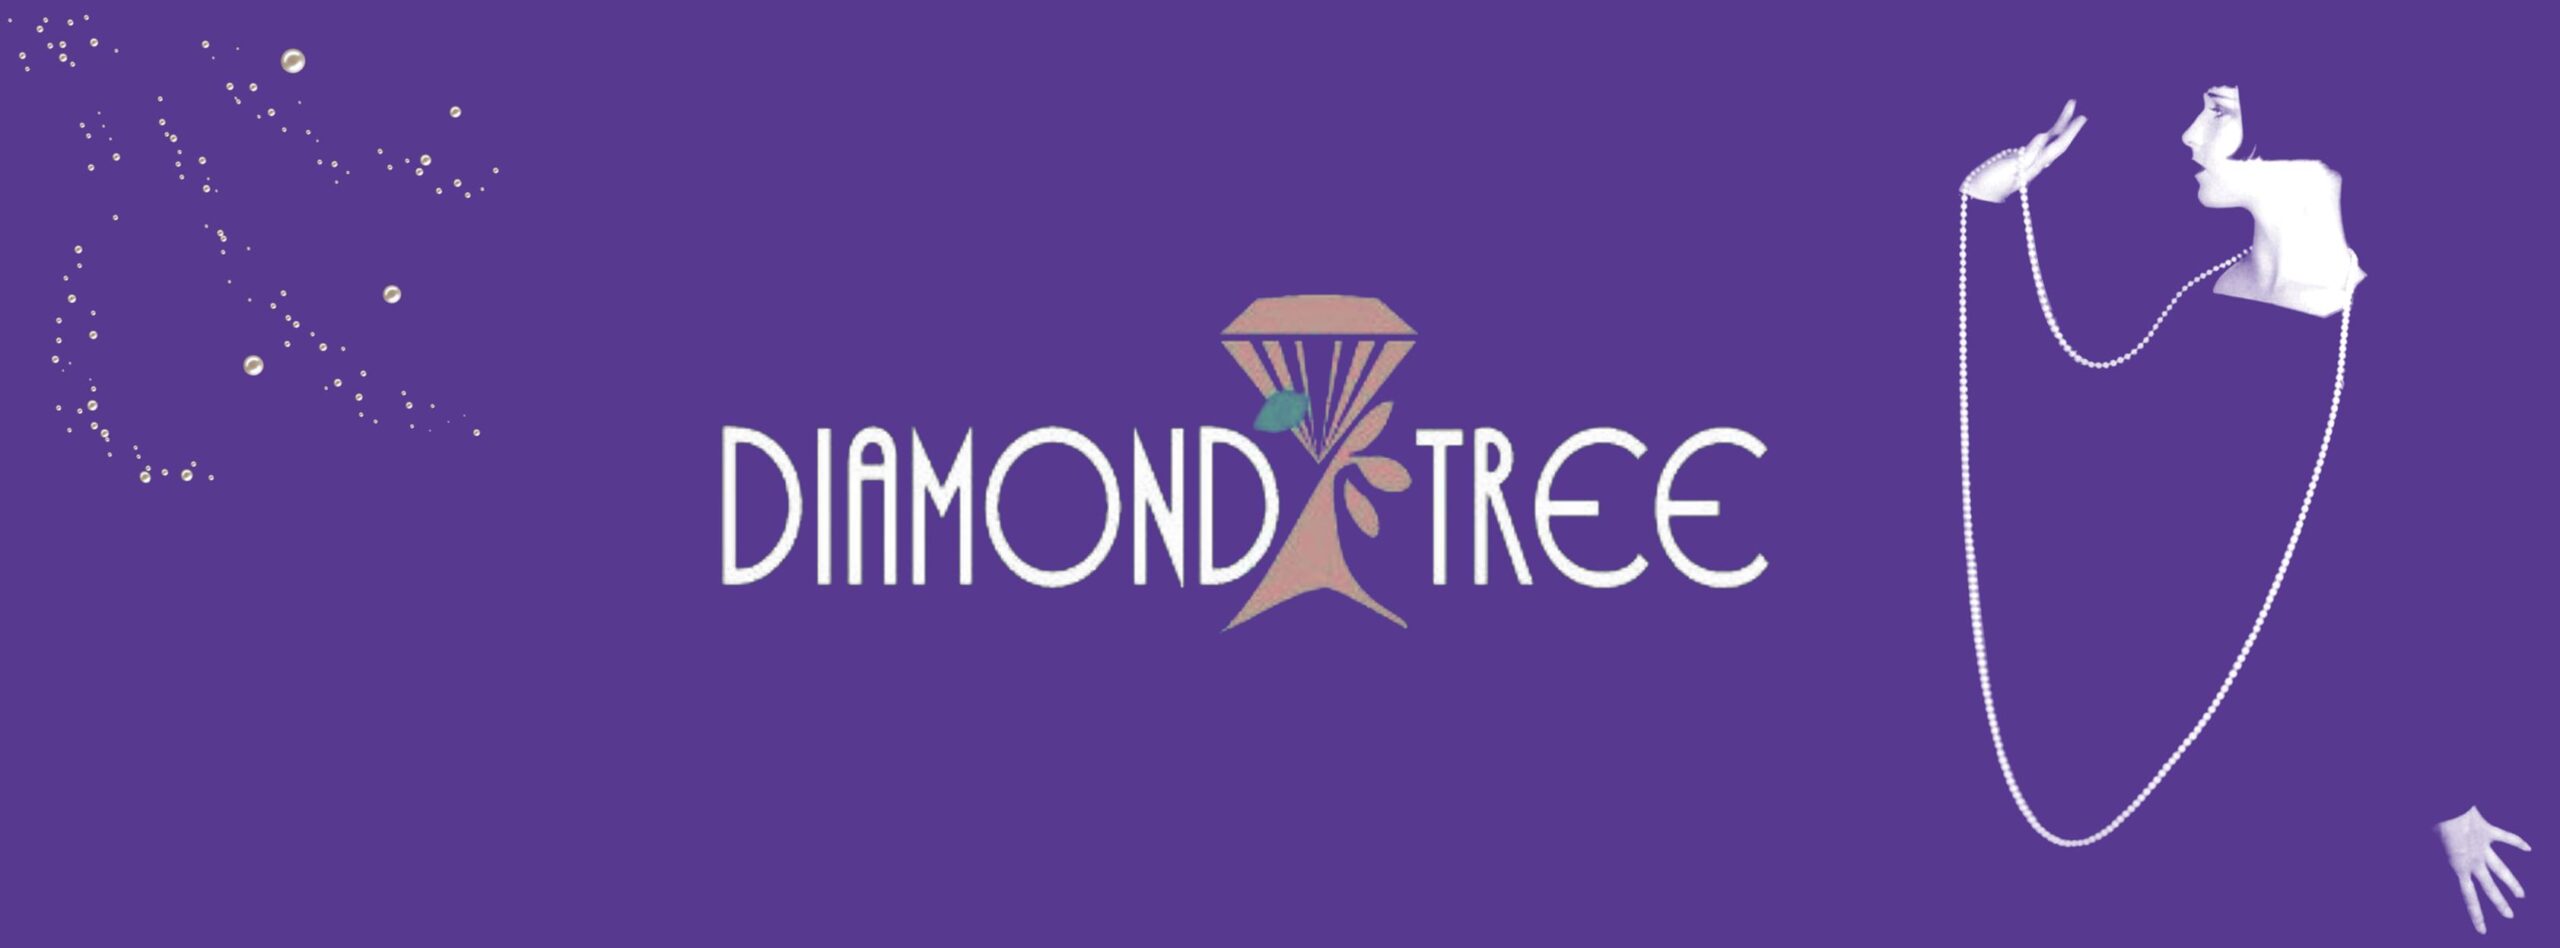 Diamondtree Jewels Banner